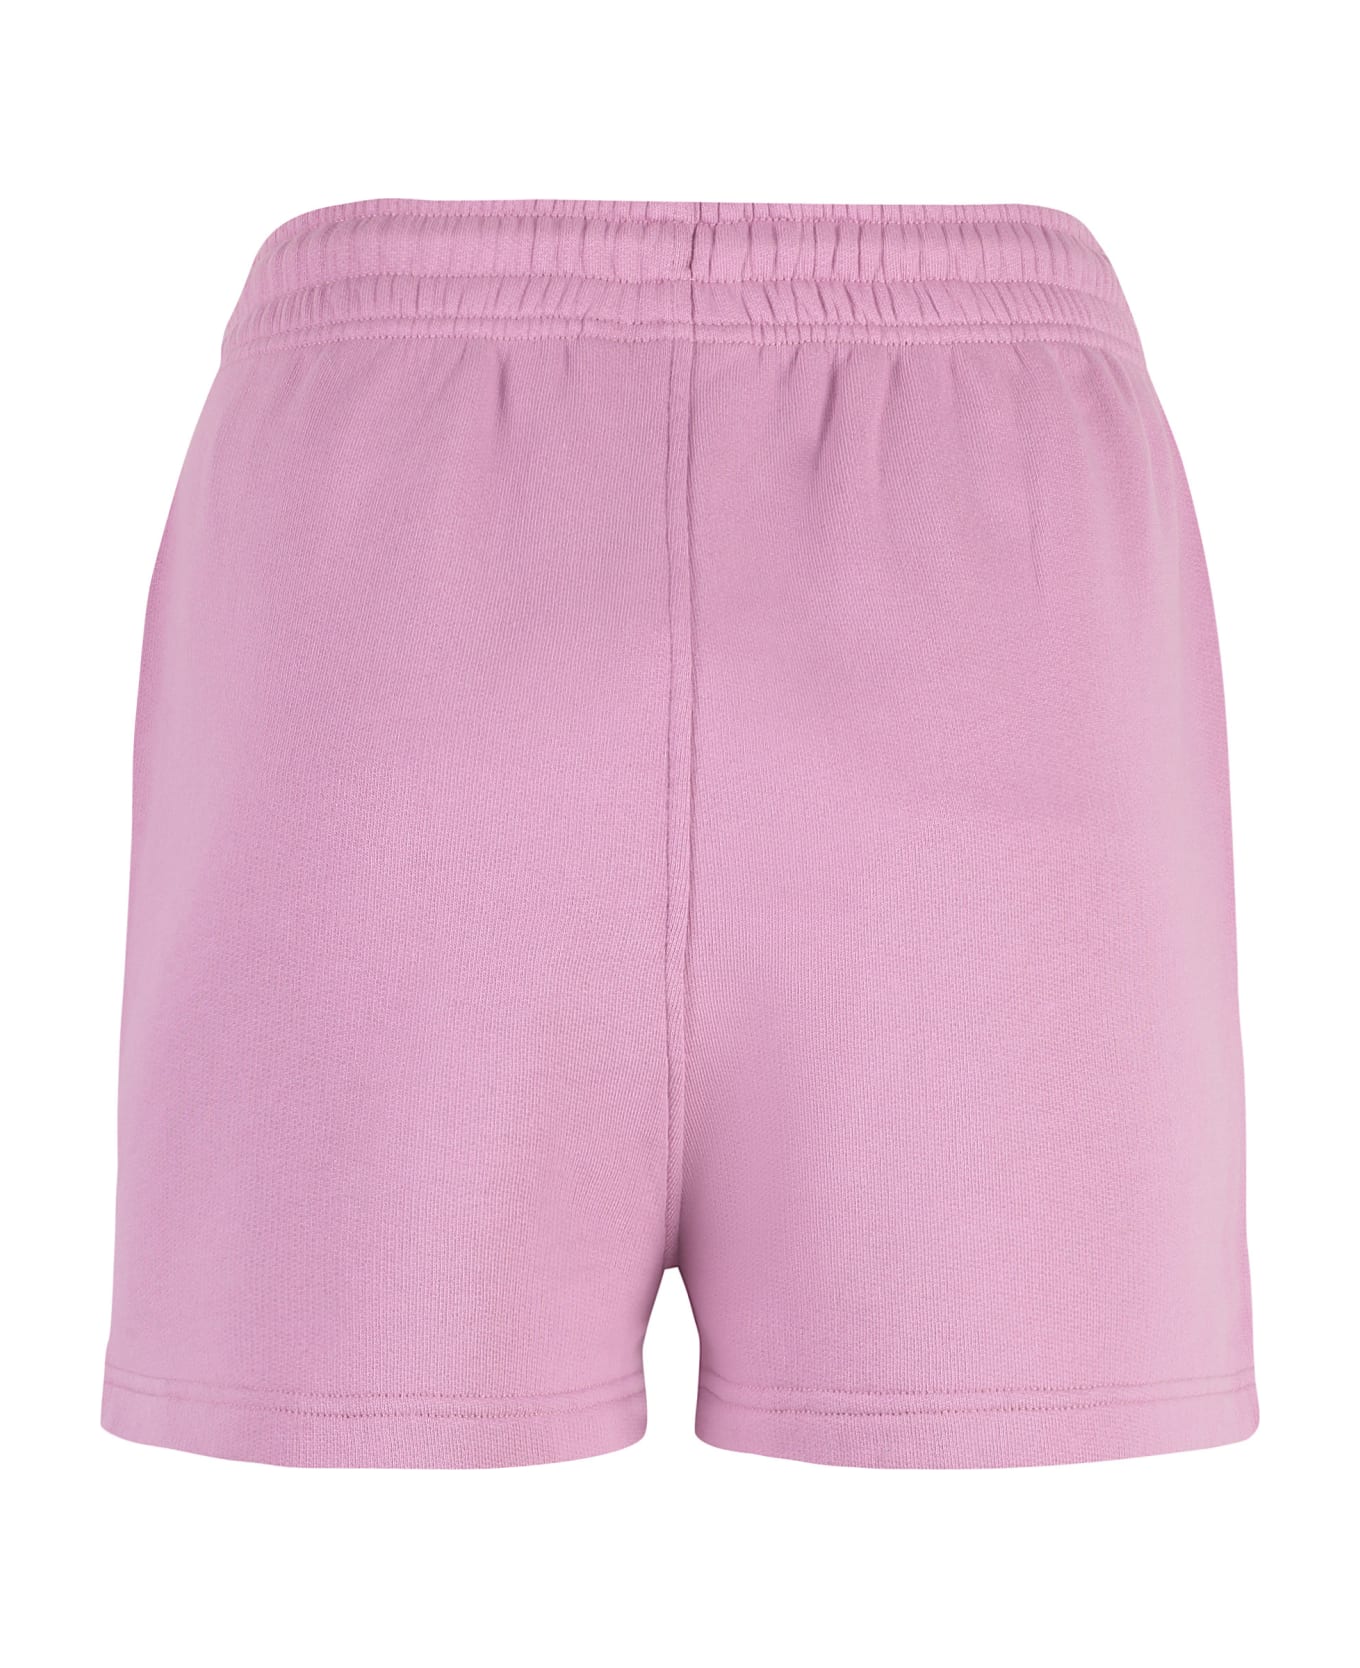 Maison Kitsuné Cotton Shorts - Pink